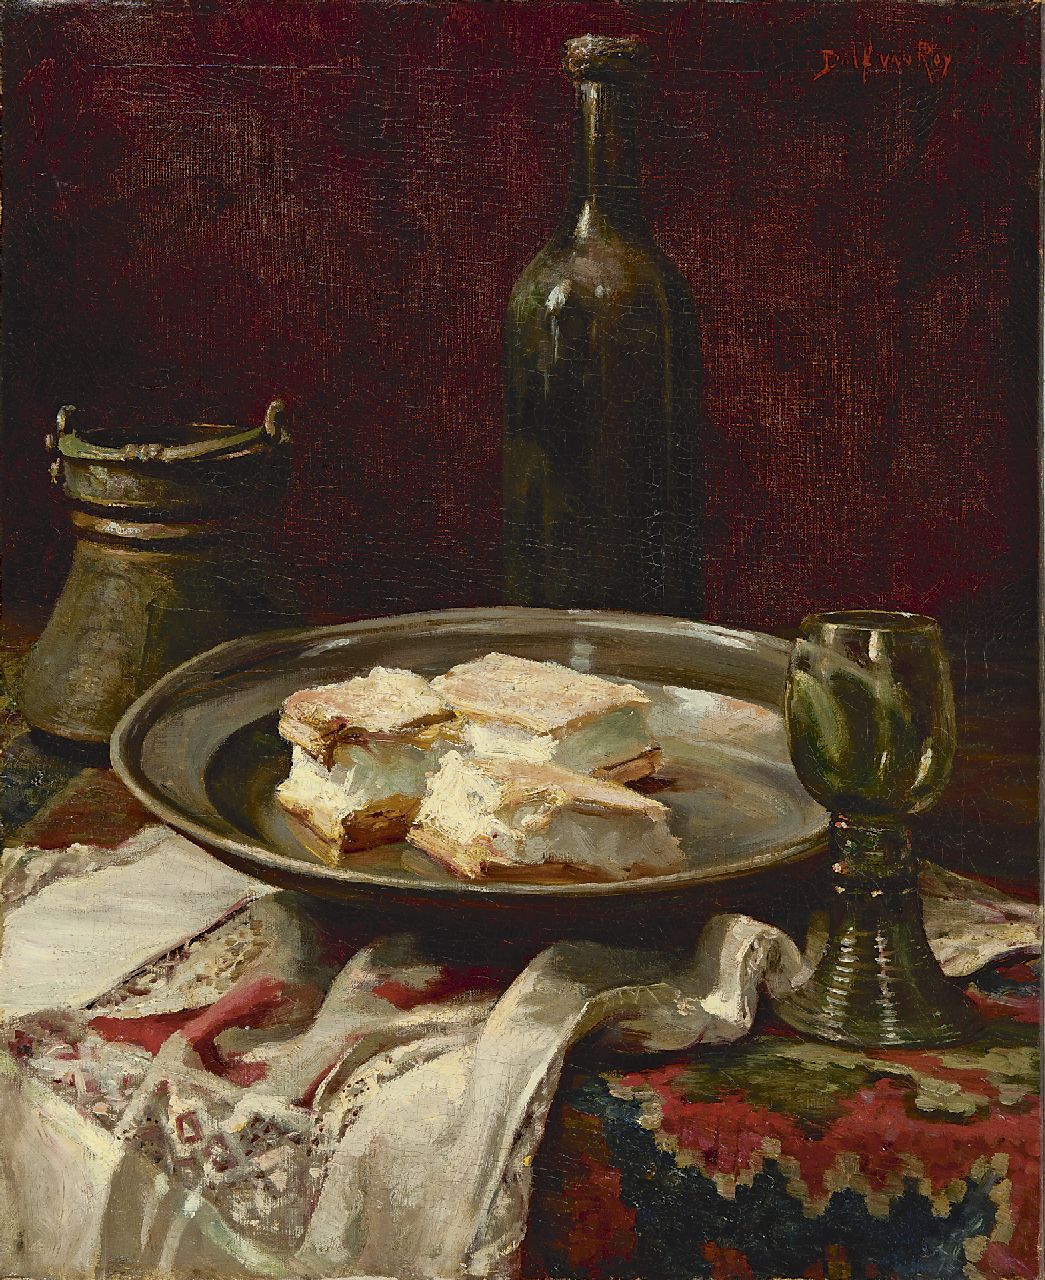 Roy D. van | Dolf van Roy, The dessert, oil on canvas 55.1 x 45.7 cm, signed u.r.